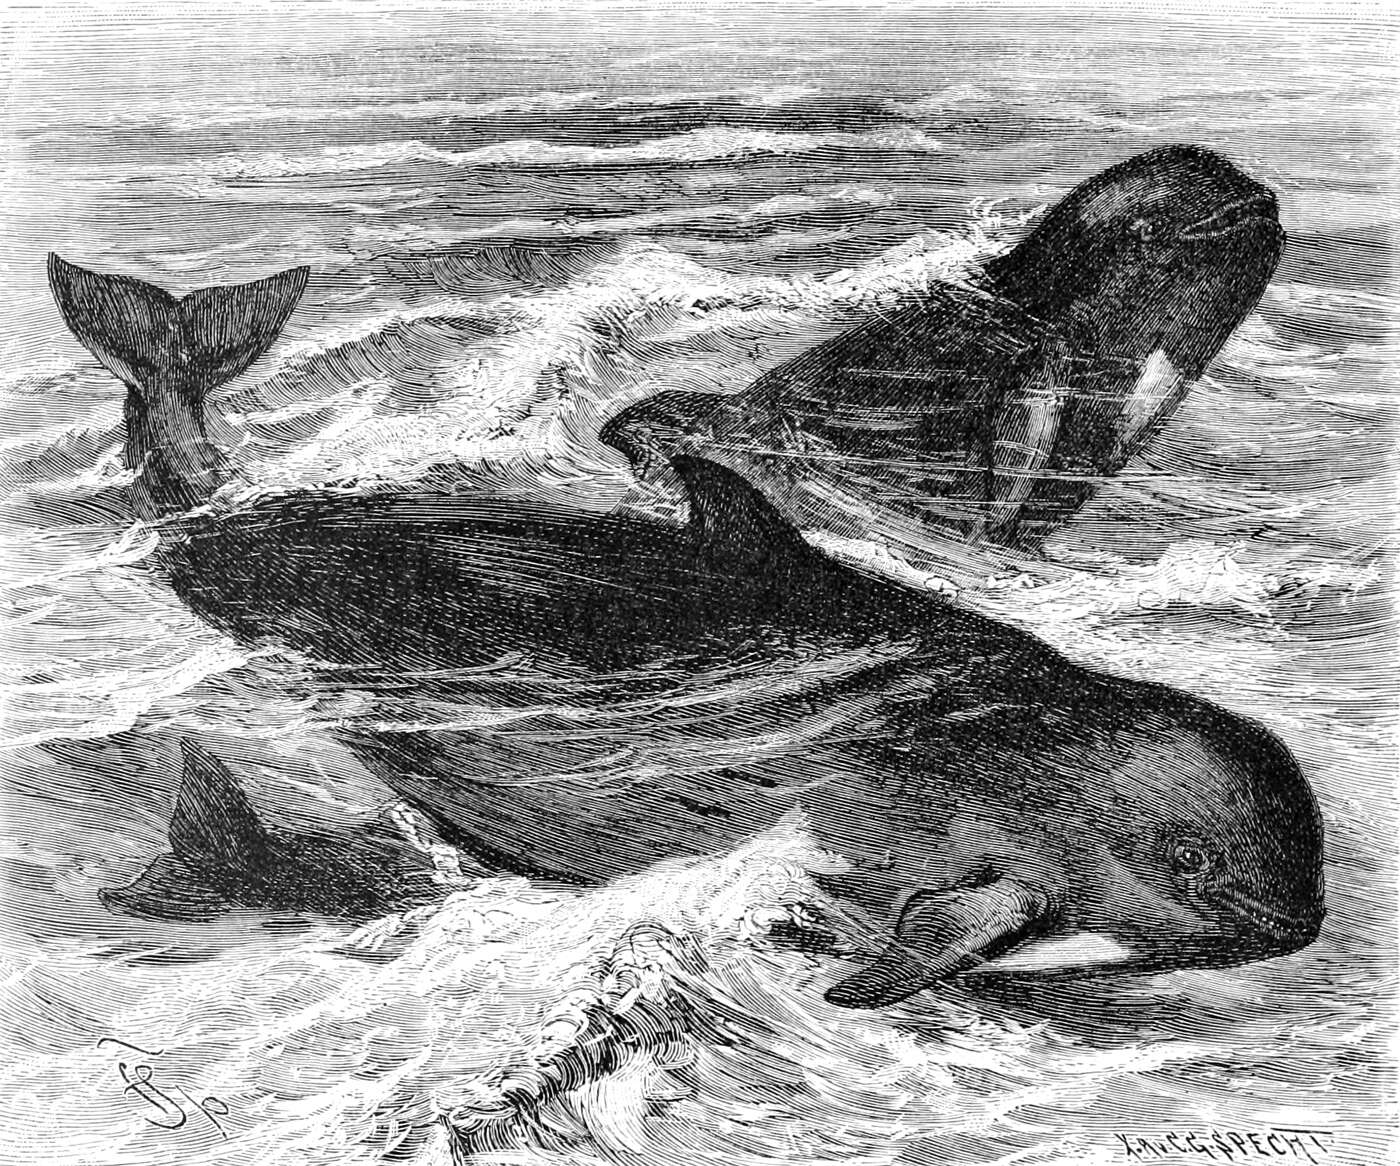 Image of Atlantic Pilot Whale